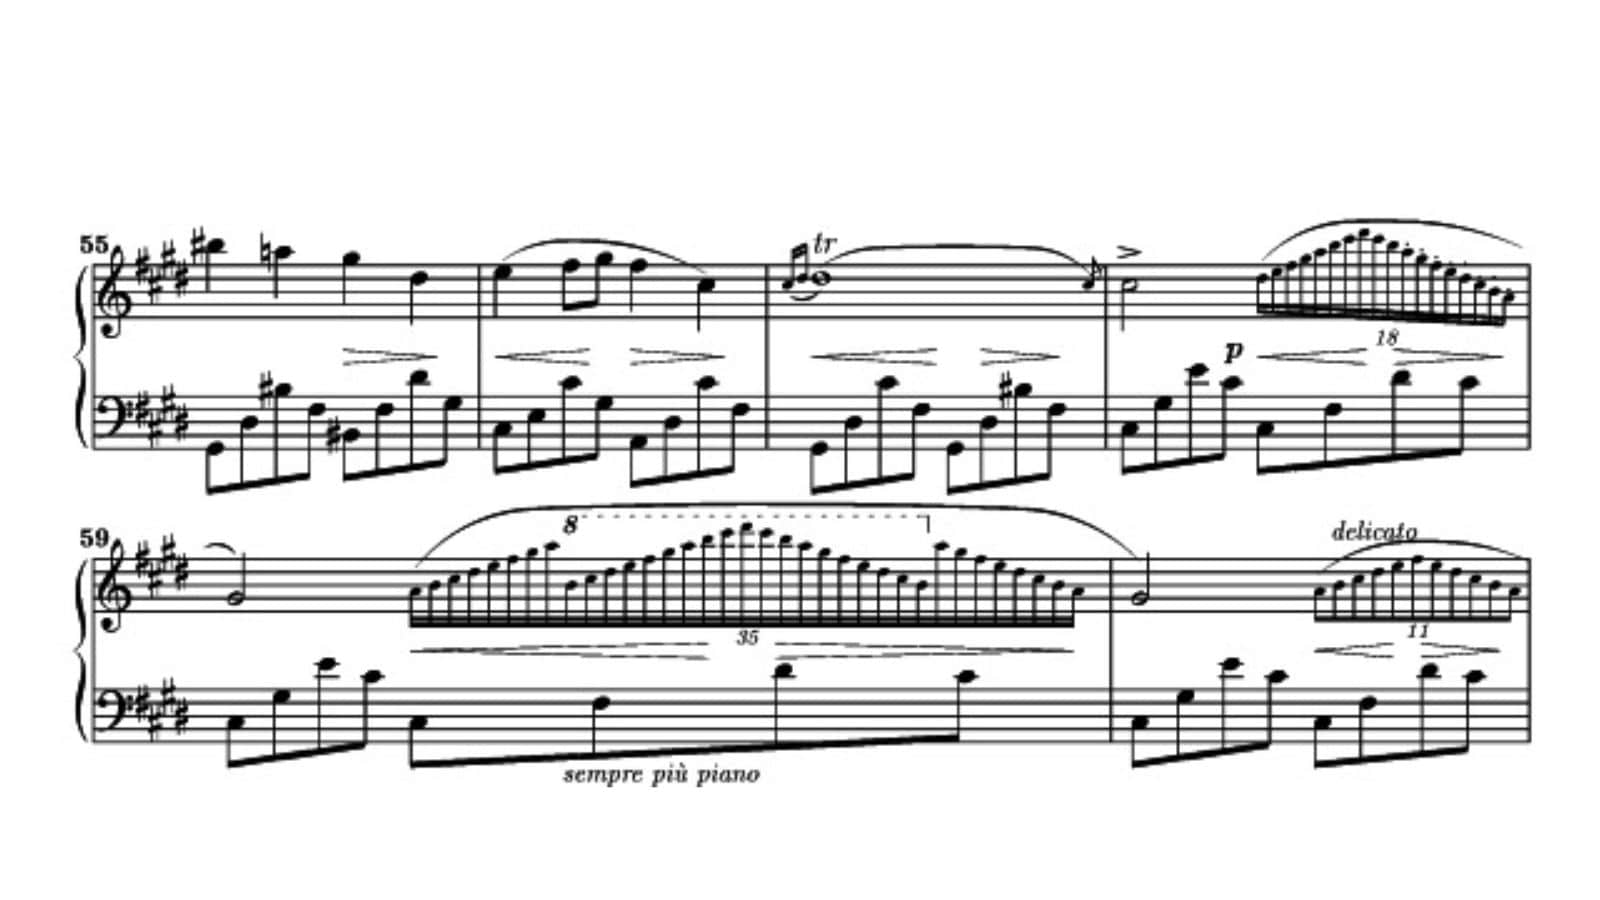 Chopin, Bars 55–60, Nocturne No. 20 in C sharp minor